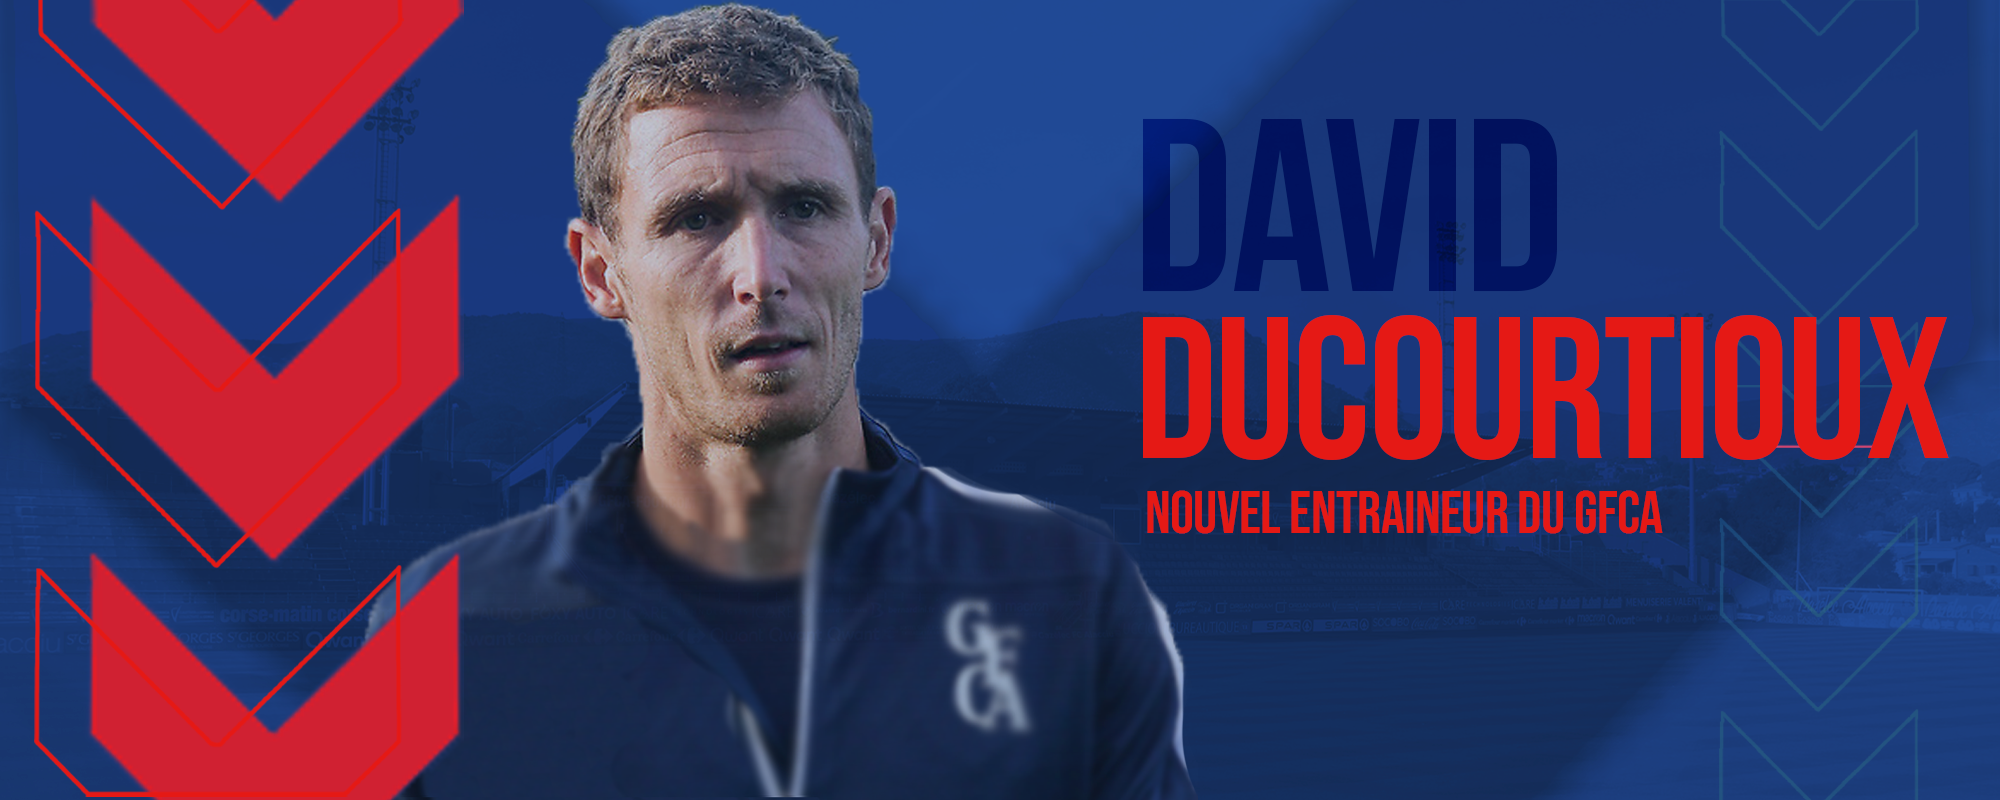 David Ducourtioux prend la suite de Ciccolini au GFCA